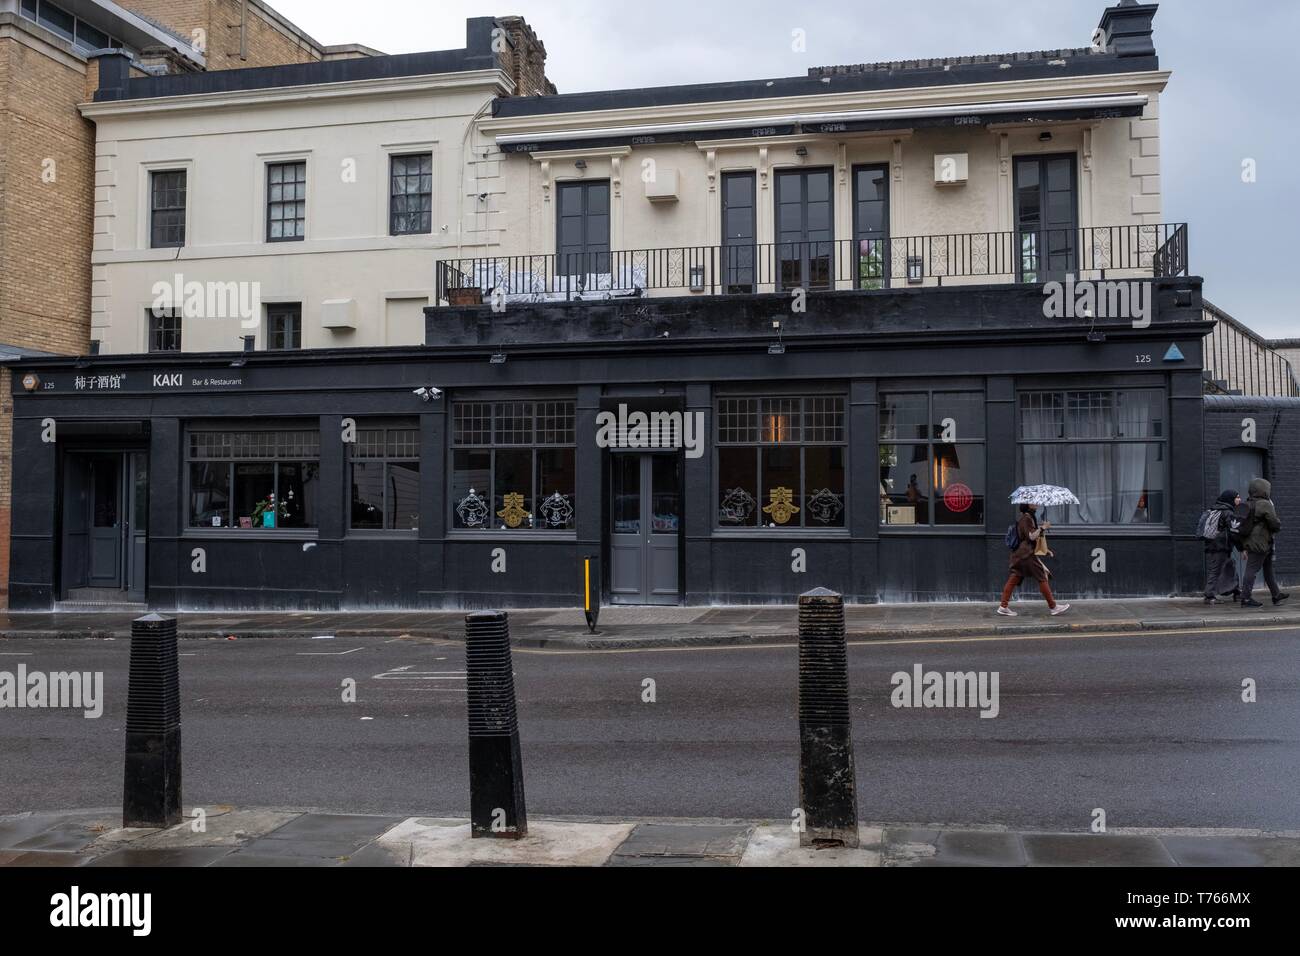 Kaki bar, Caledonian Road, London Stock Photo